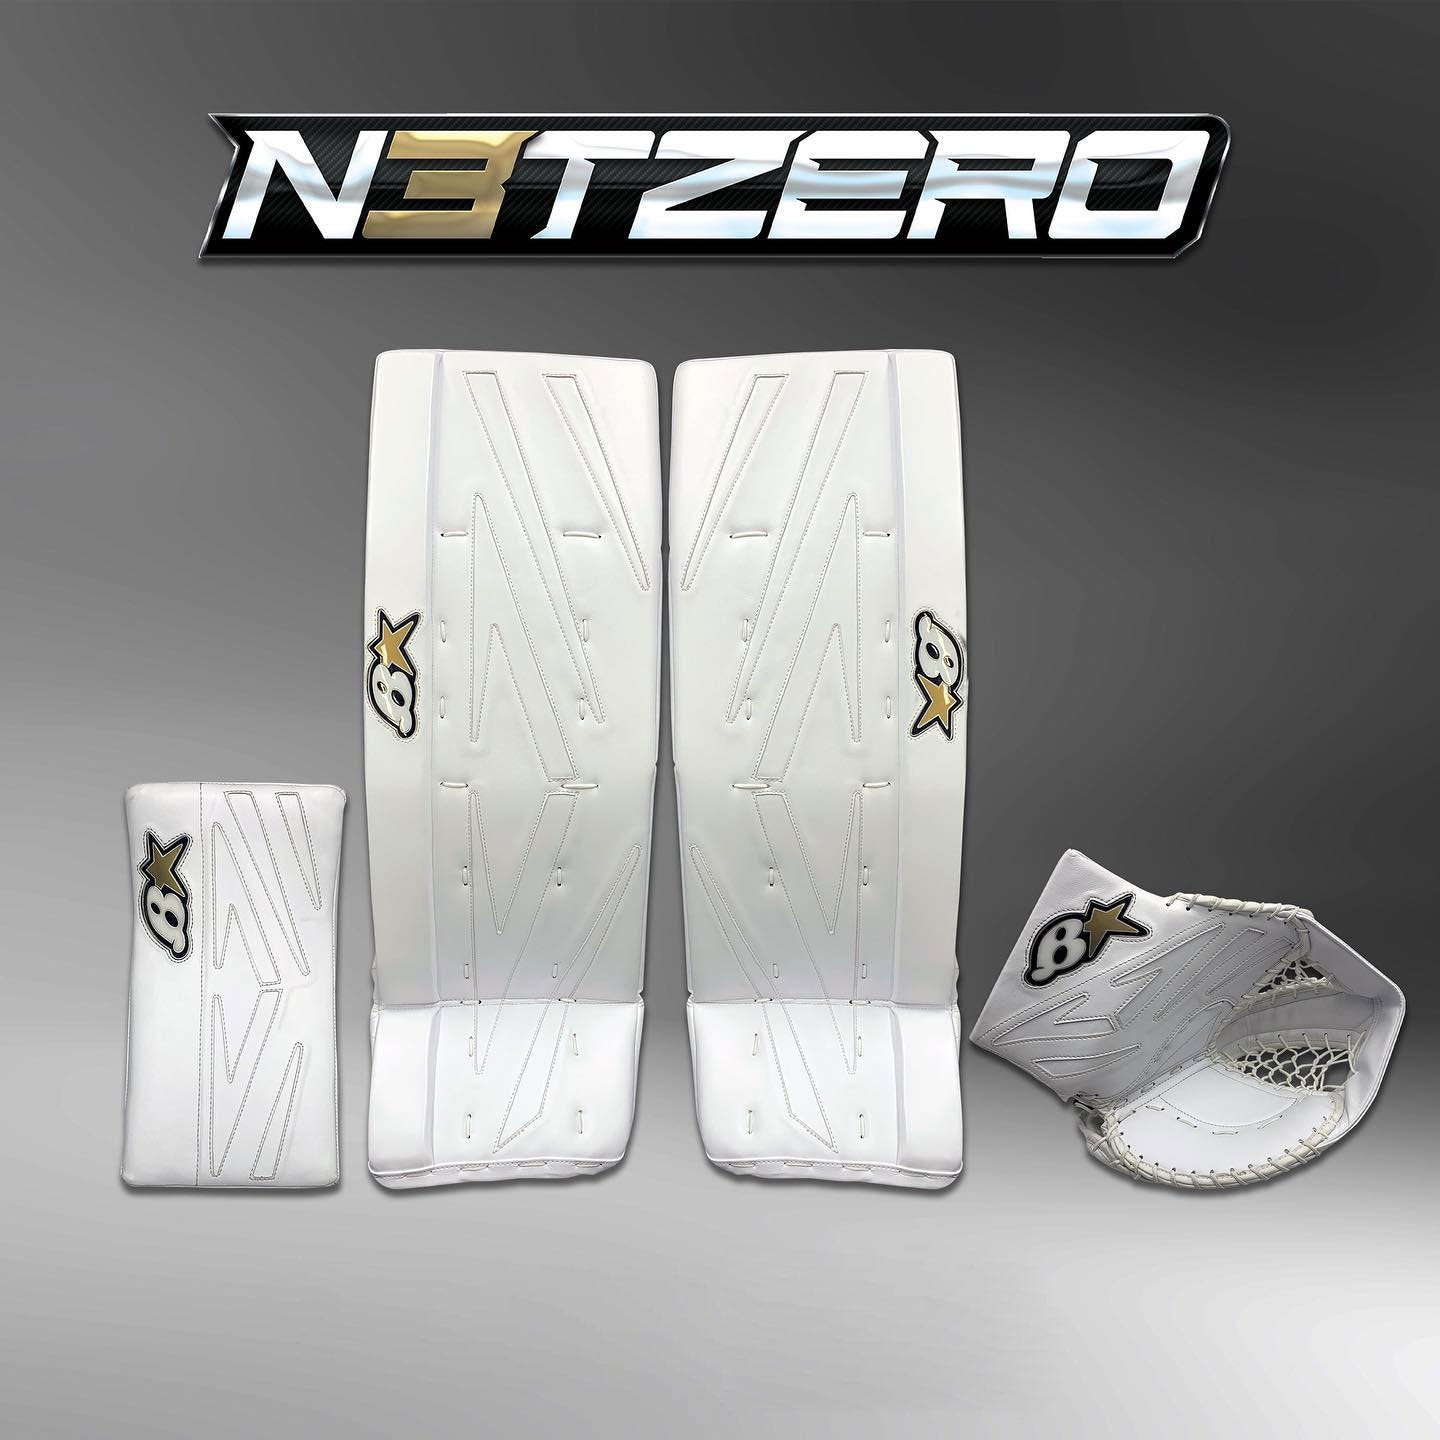 Brian's NetZero 3 Goalie Equipment